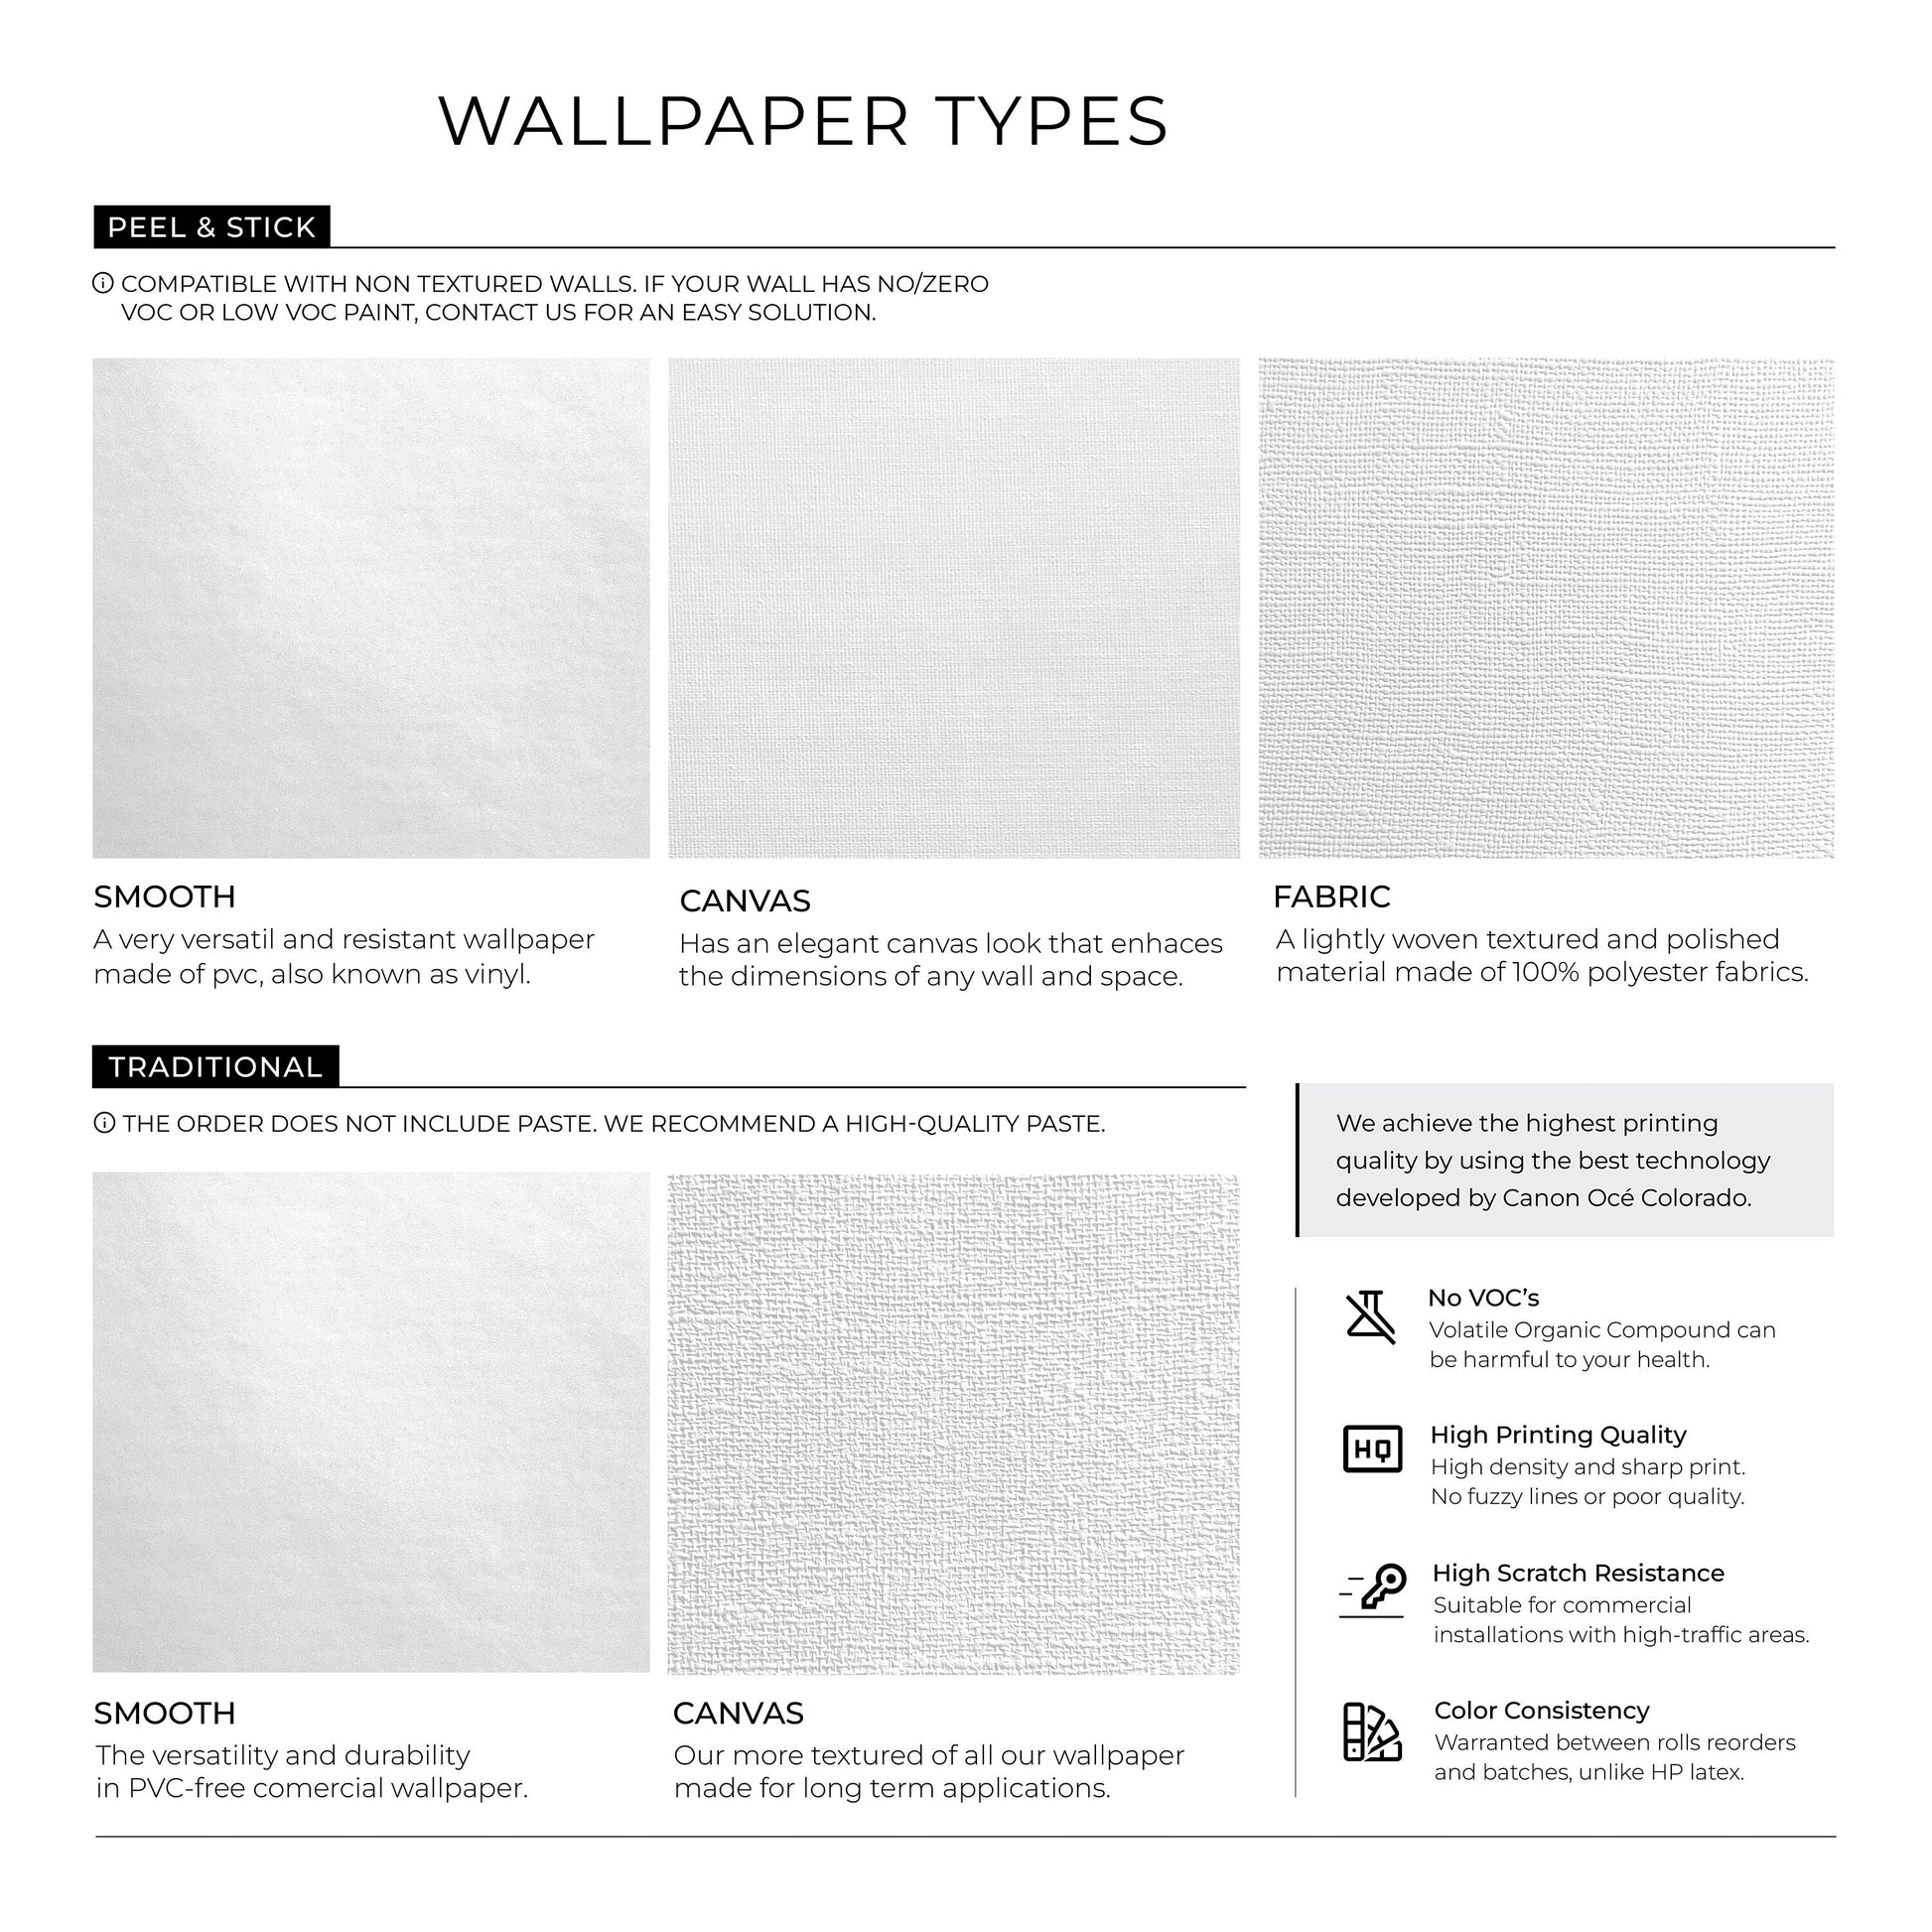 Beige Abstract Wallpaper Ethnic Wallpaper Peel and Stick Wallpaper Home Decor - D552